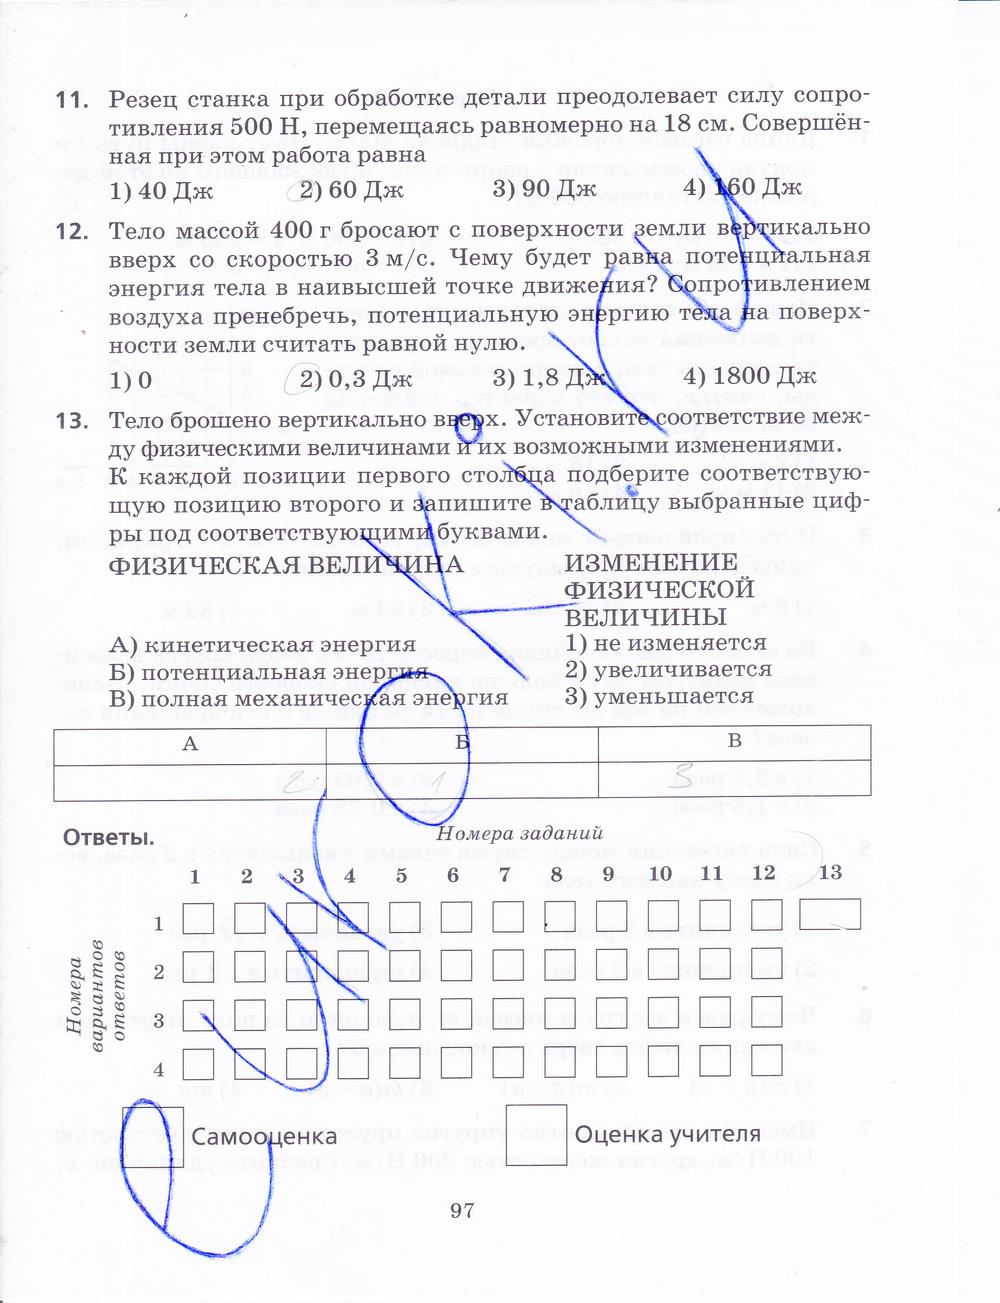 гдз 9 класс рабочая тетрадь страница 97 физика Пурышева, Важеевская, Чаругин